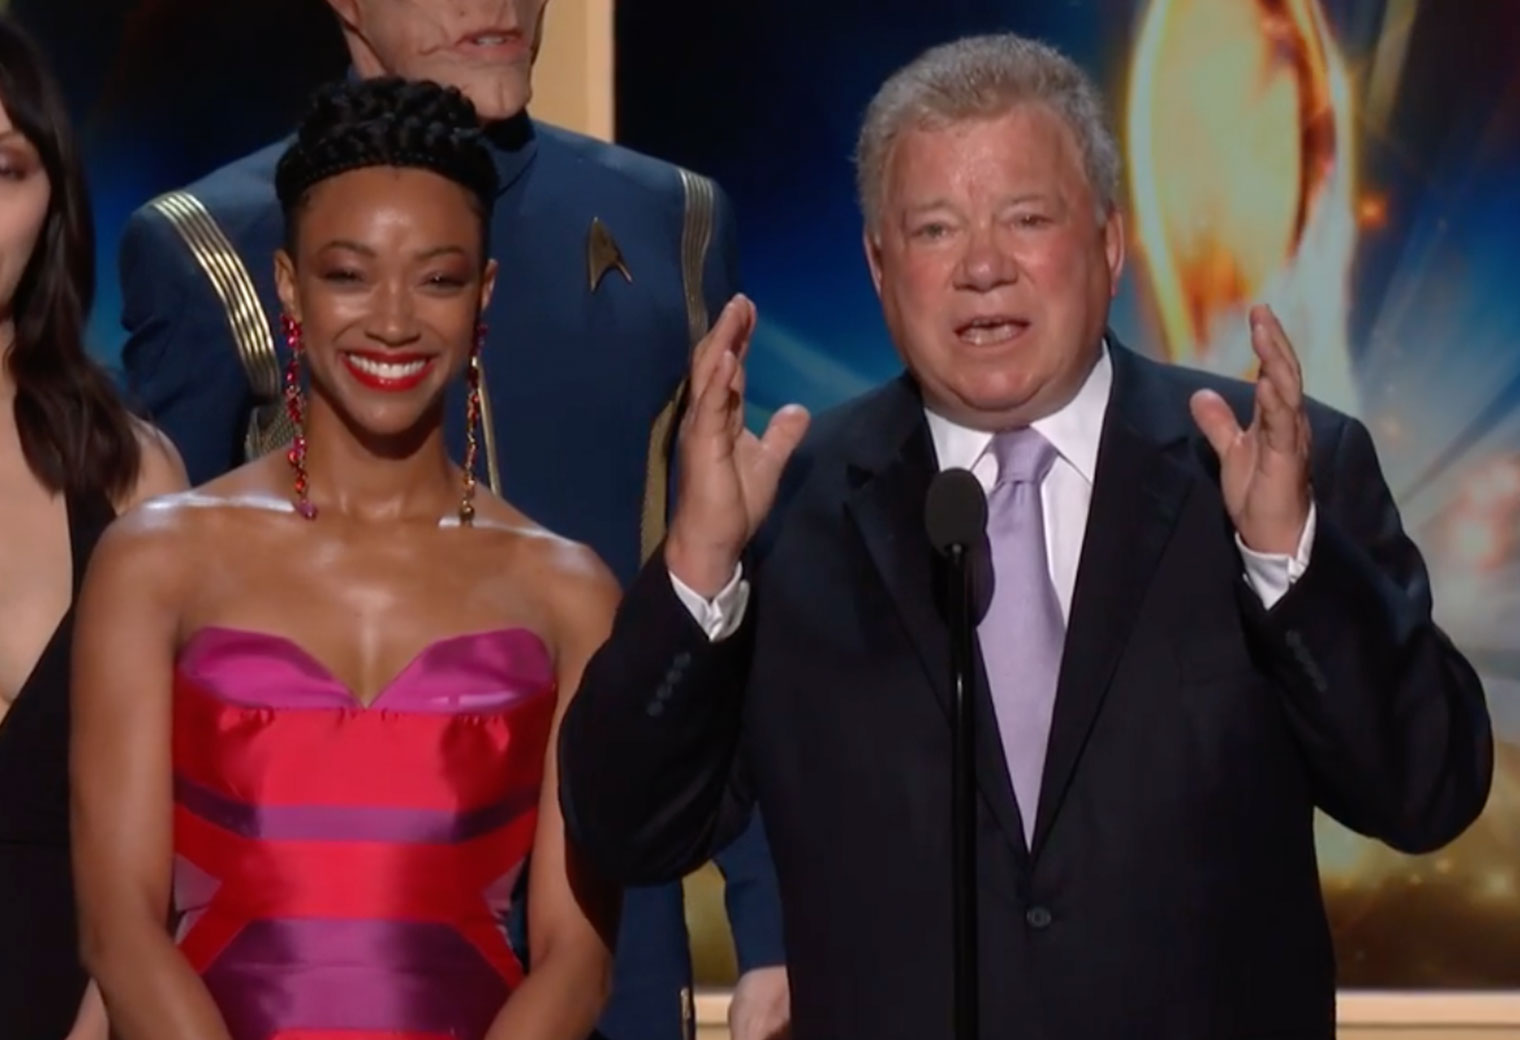 WATCH: William Shatner, Sonequa Martin-Green, Star Trek Alums Accept Emmy Award